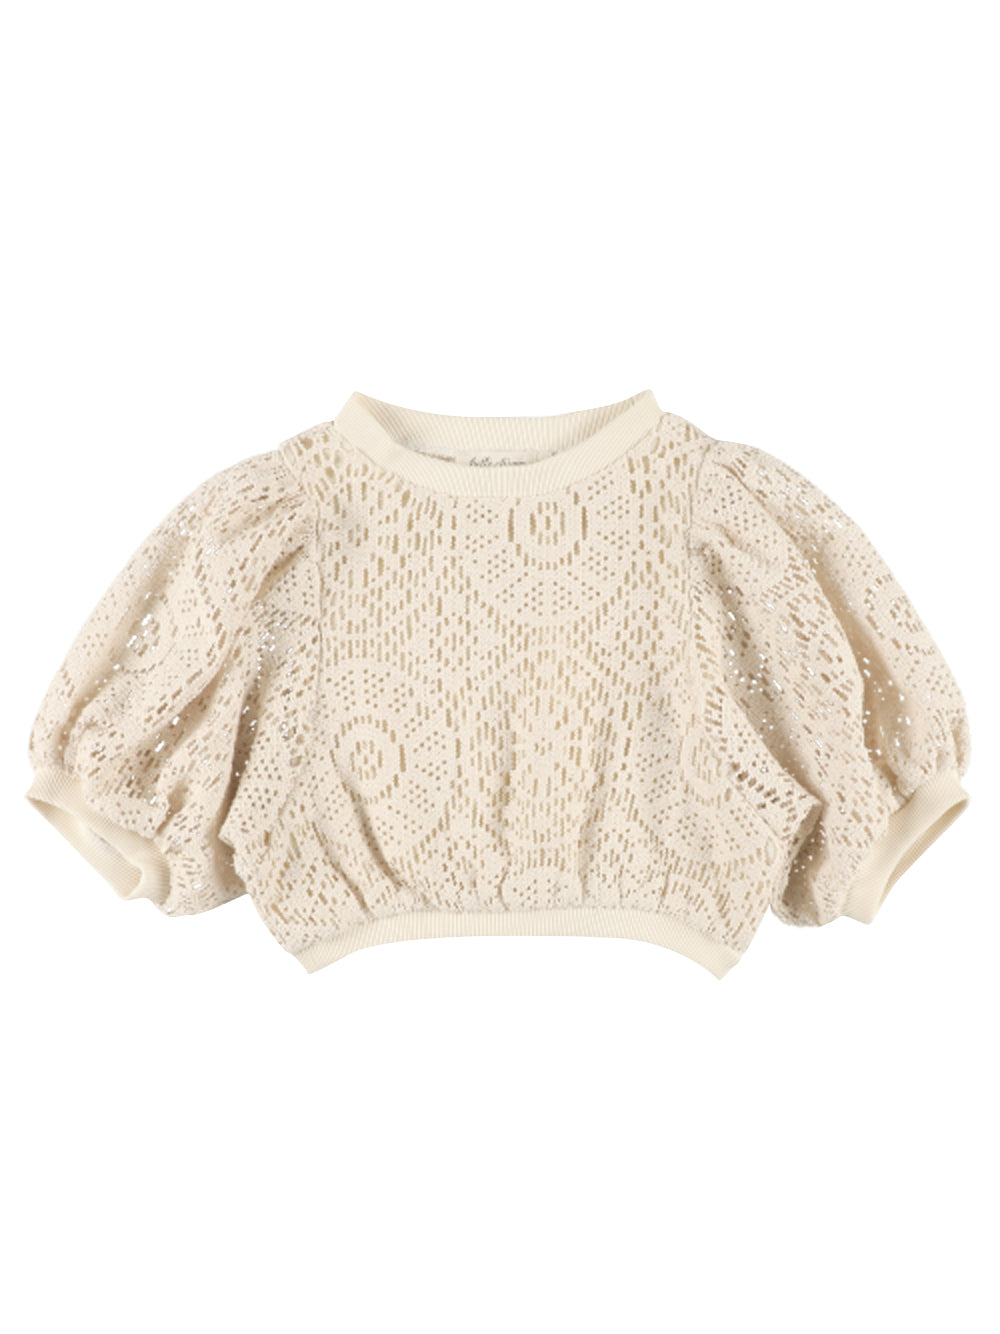 PREORDER: Puffed Sleeve Crochet Top